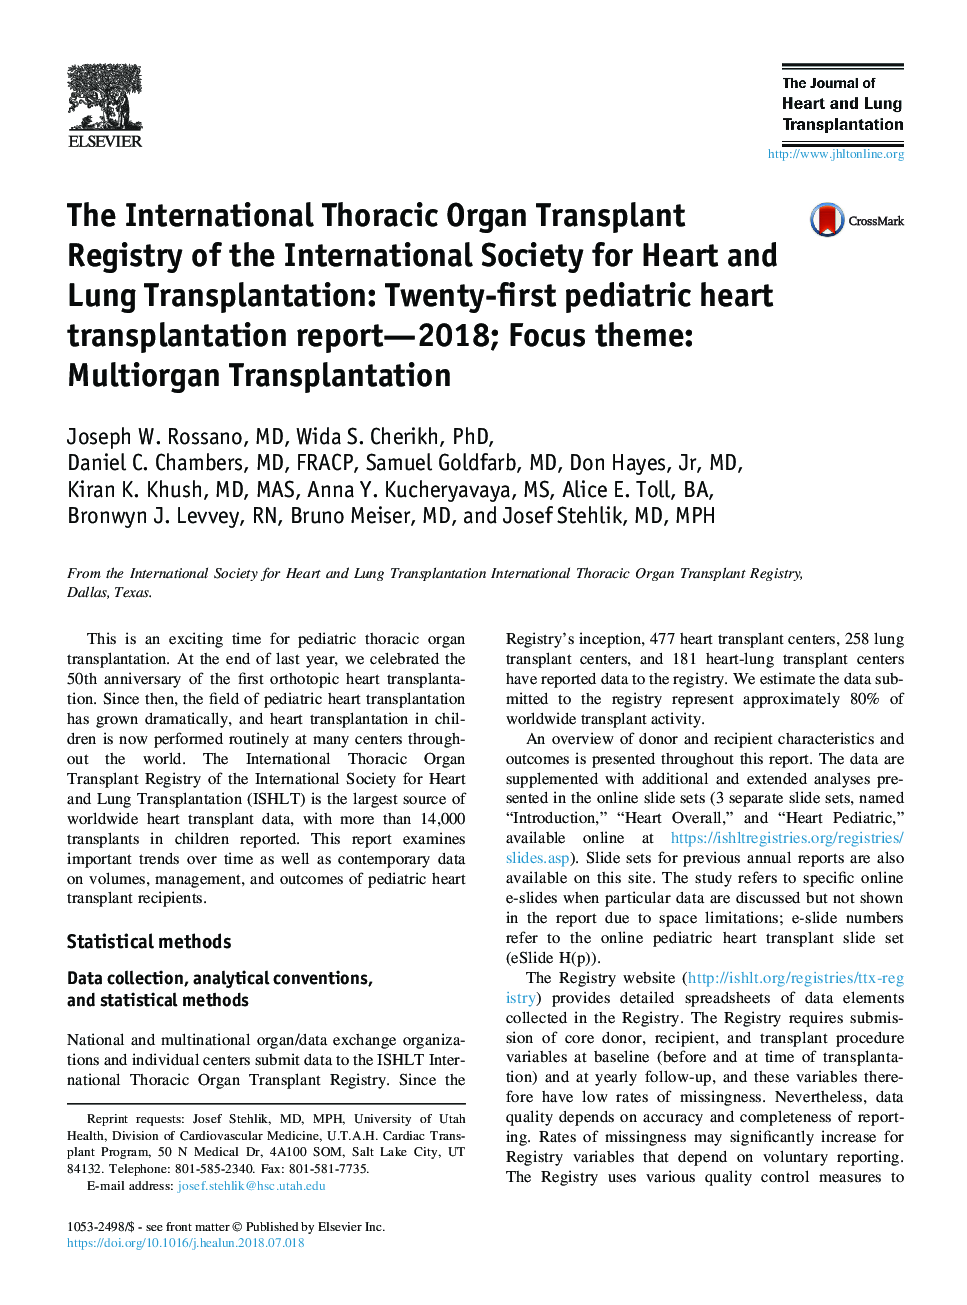 The International Thoracic Organ Transplant Registry of the International Society for Heart and Lung Transplantation: Twenty-first pediatric heart transplantation report-2018; Focus theme: Multiorgan Transplantation